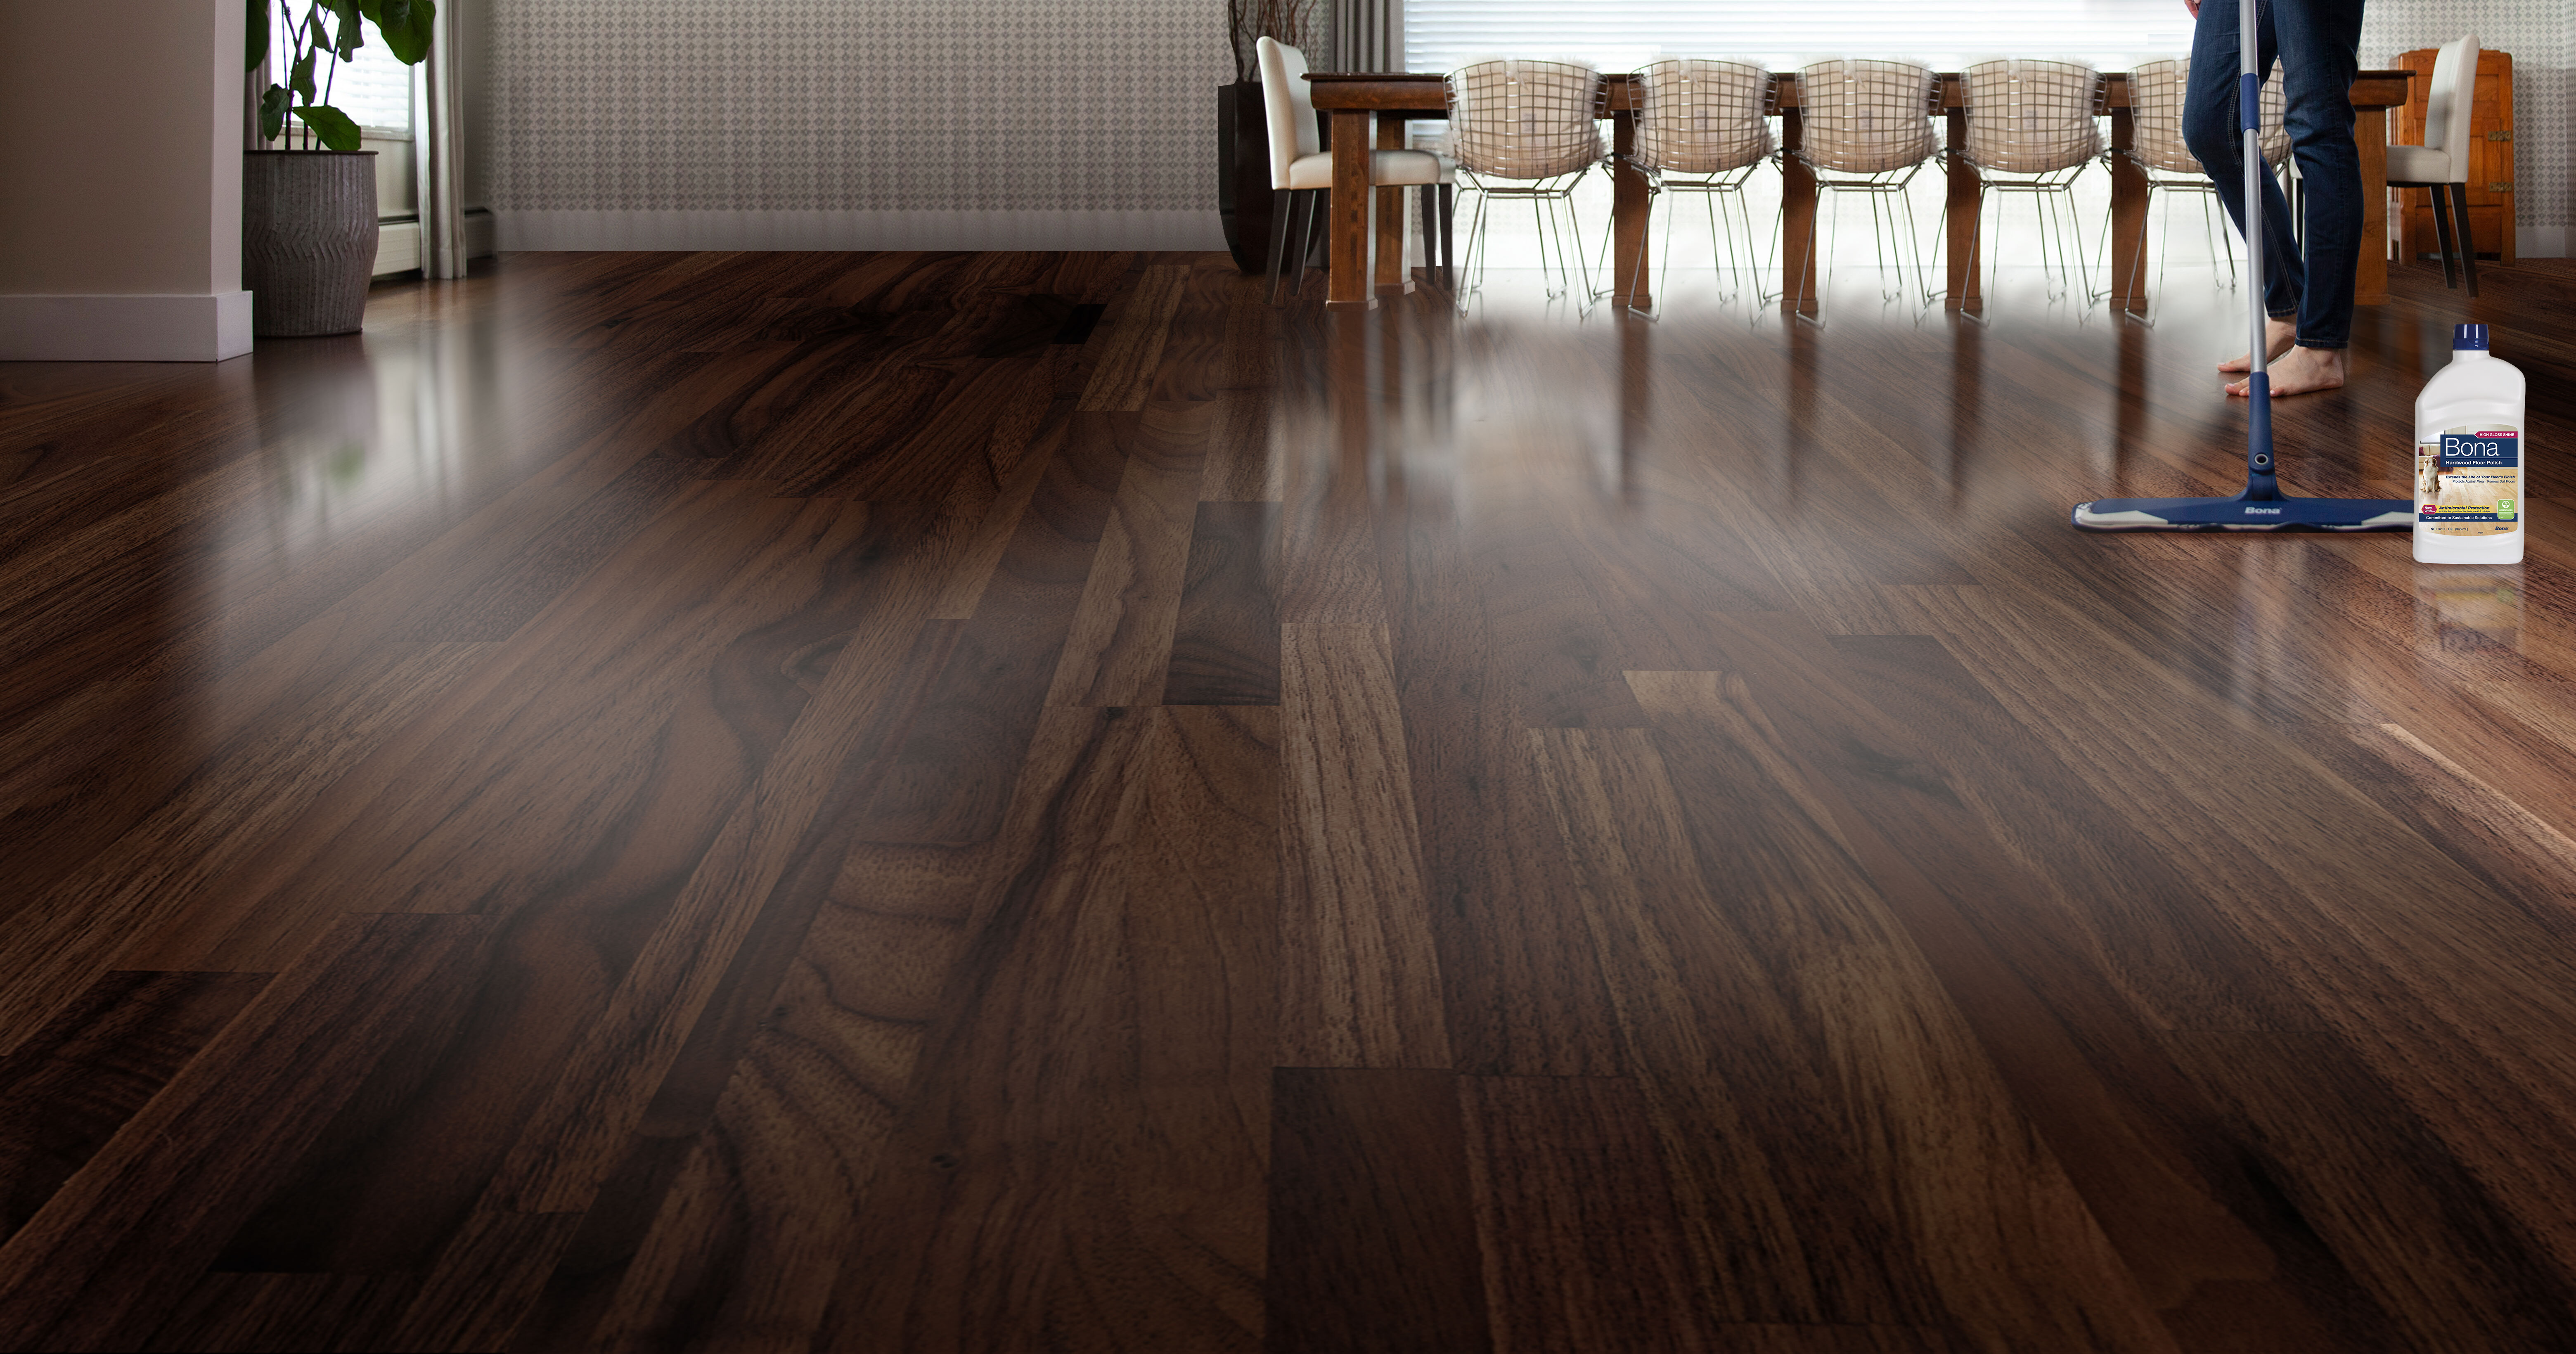 How To Polish Hardwood Floors Do S And, How To Buff Laminate Wood Floors